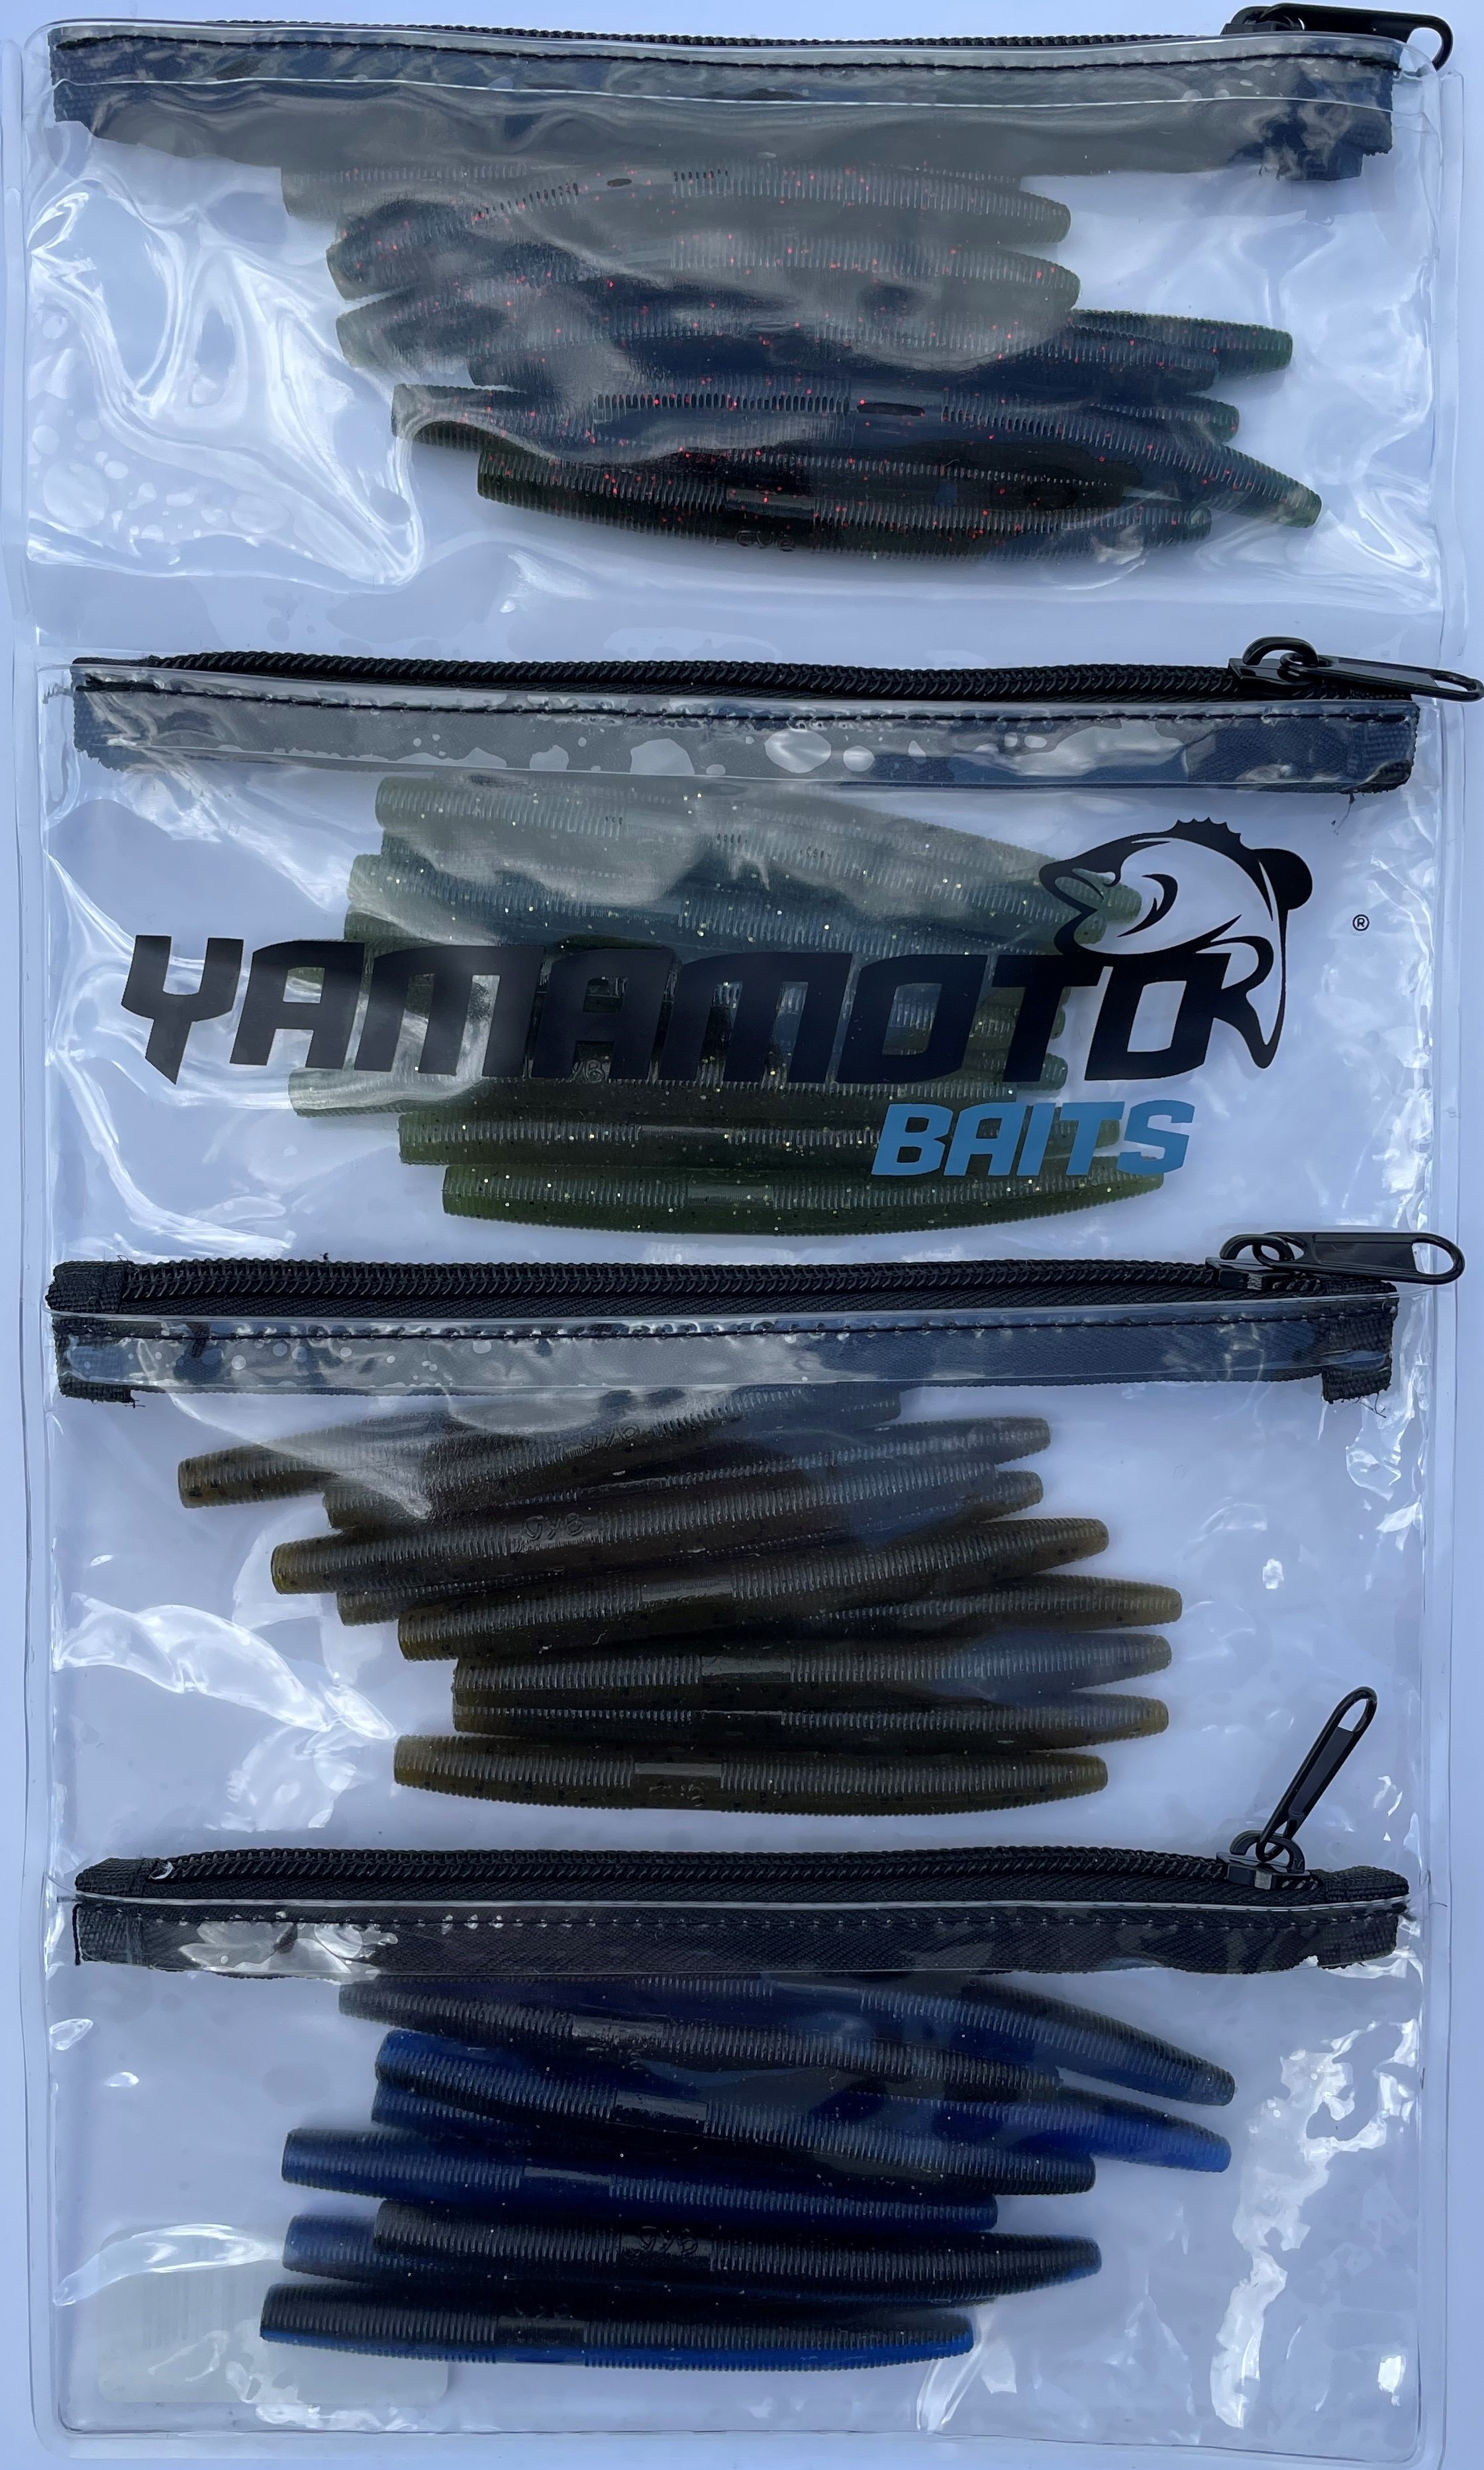 Yamamoto Senko Kits - 40 Total Baits with Bag